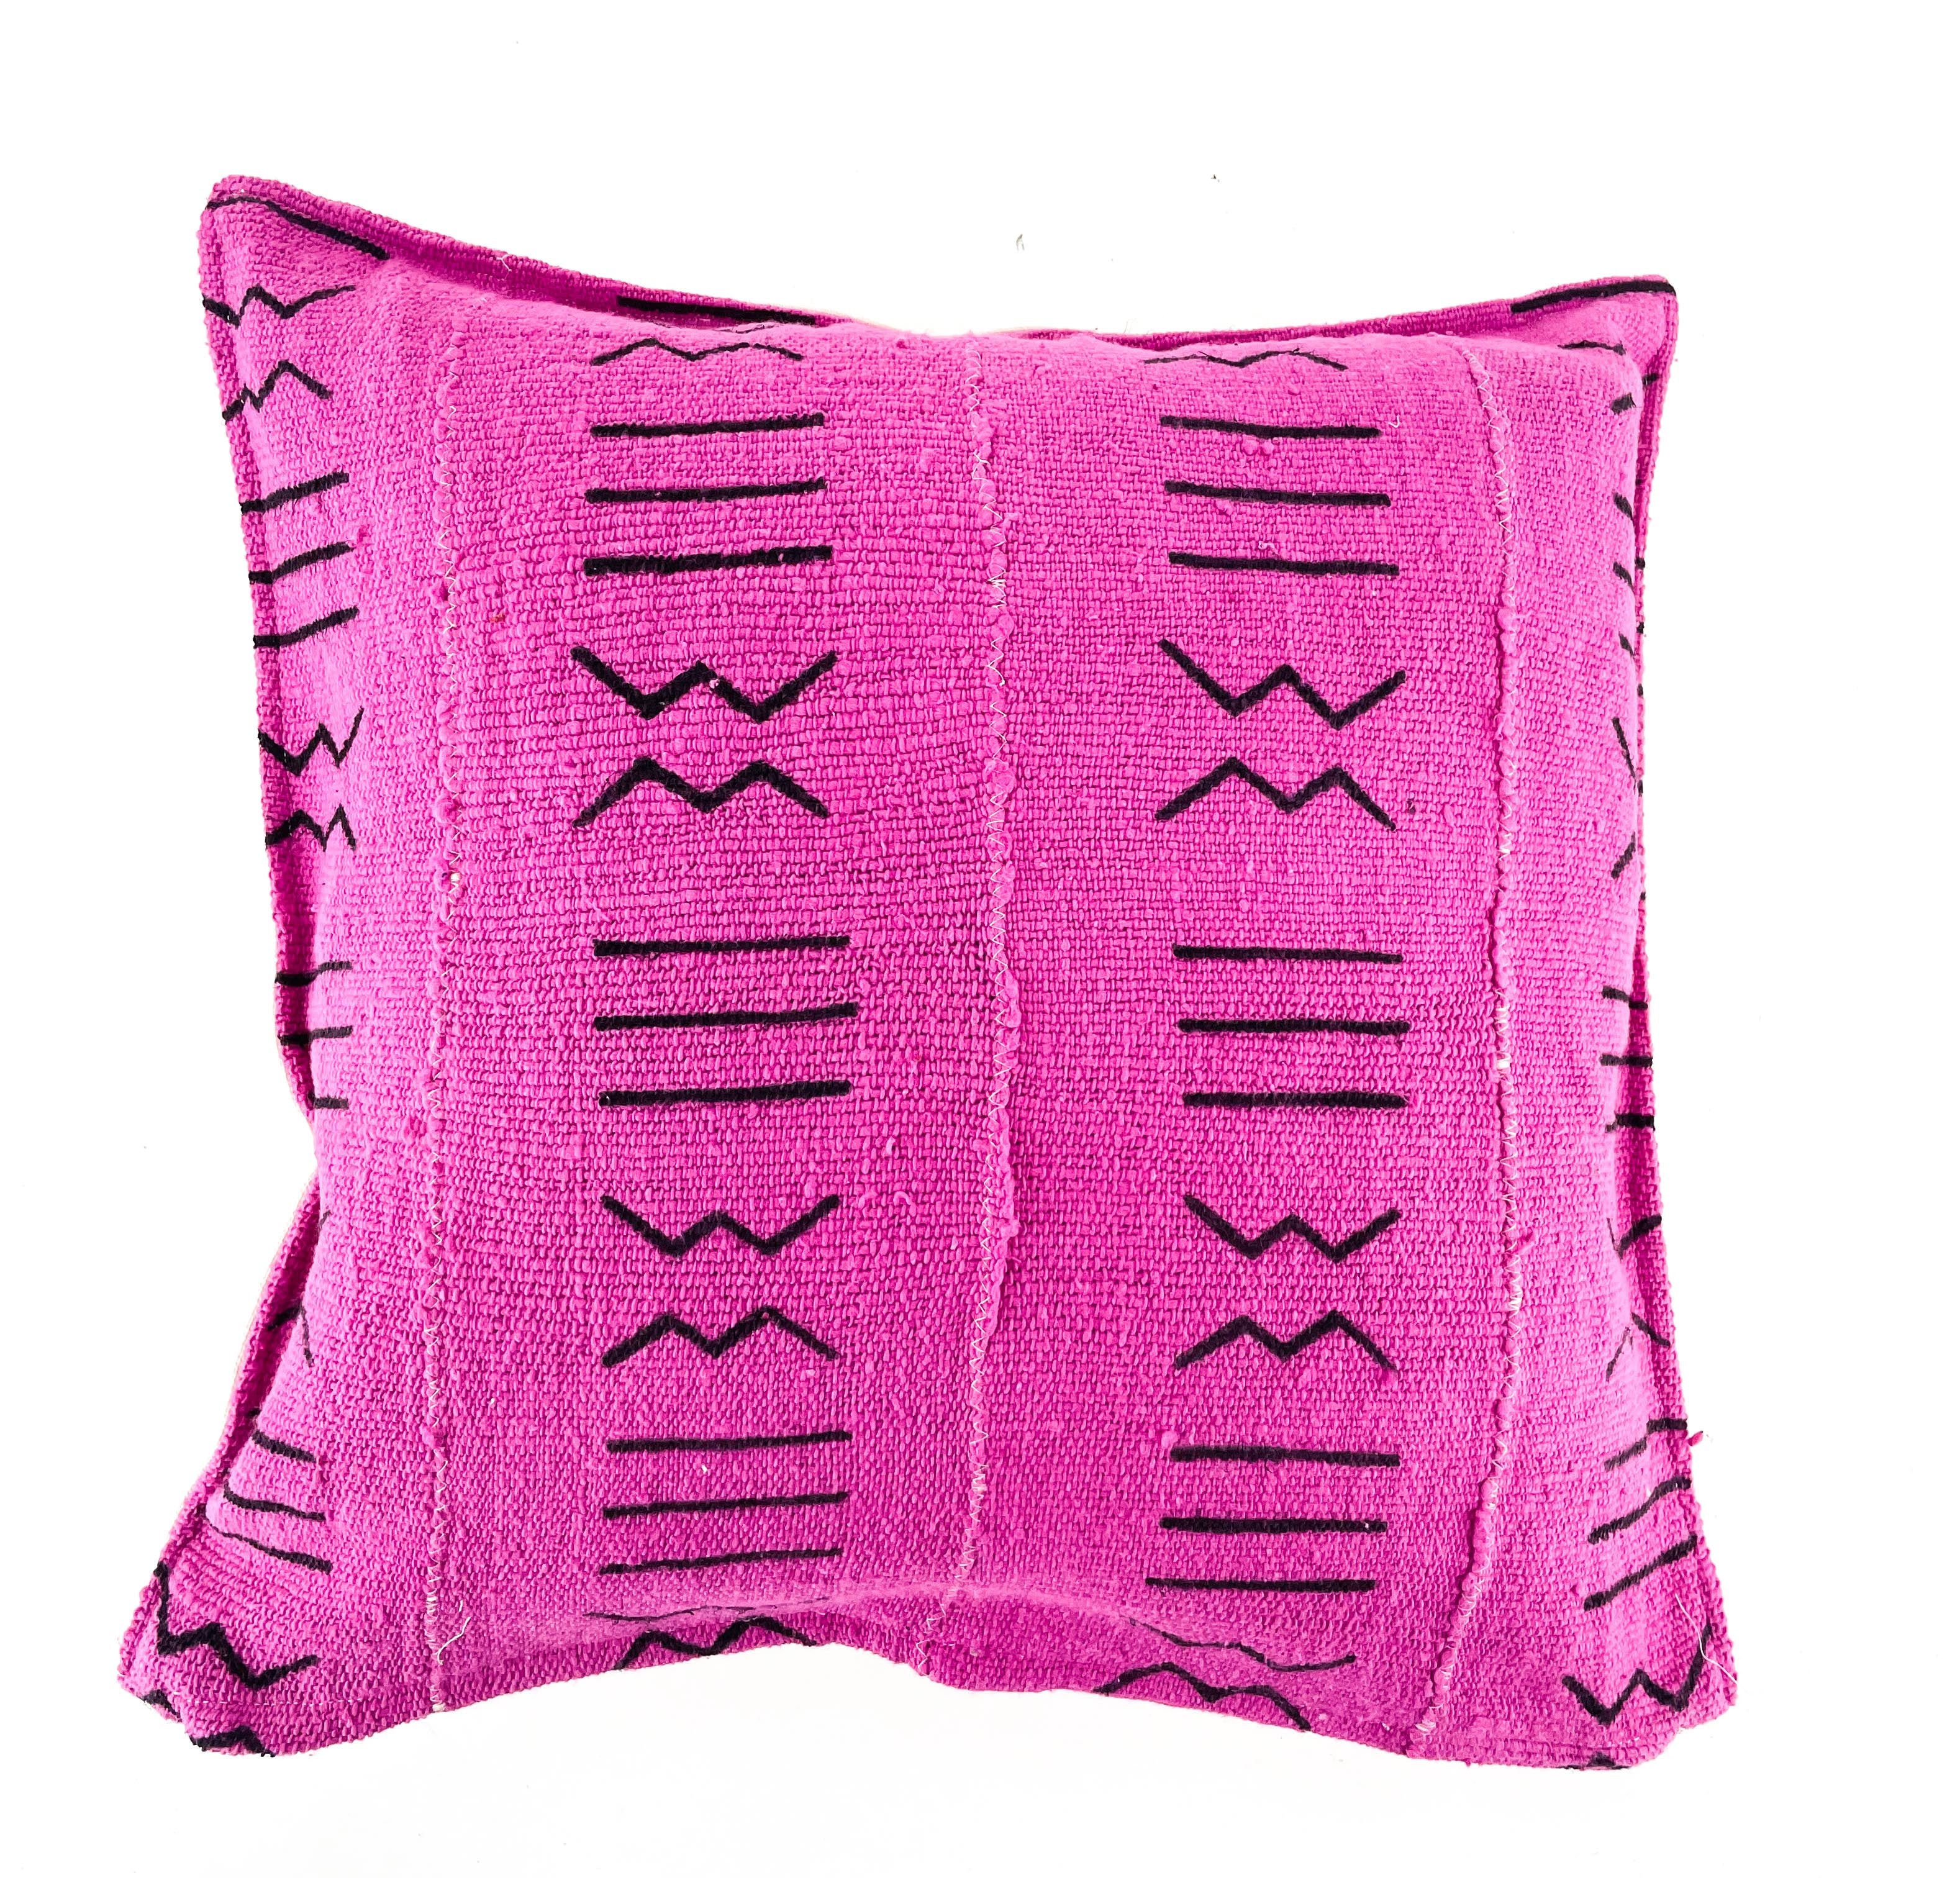 Mud cloth cushion cover pink